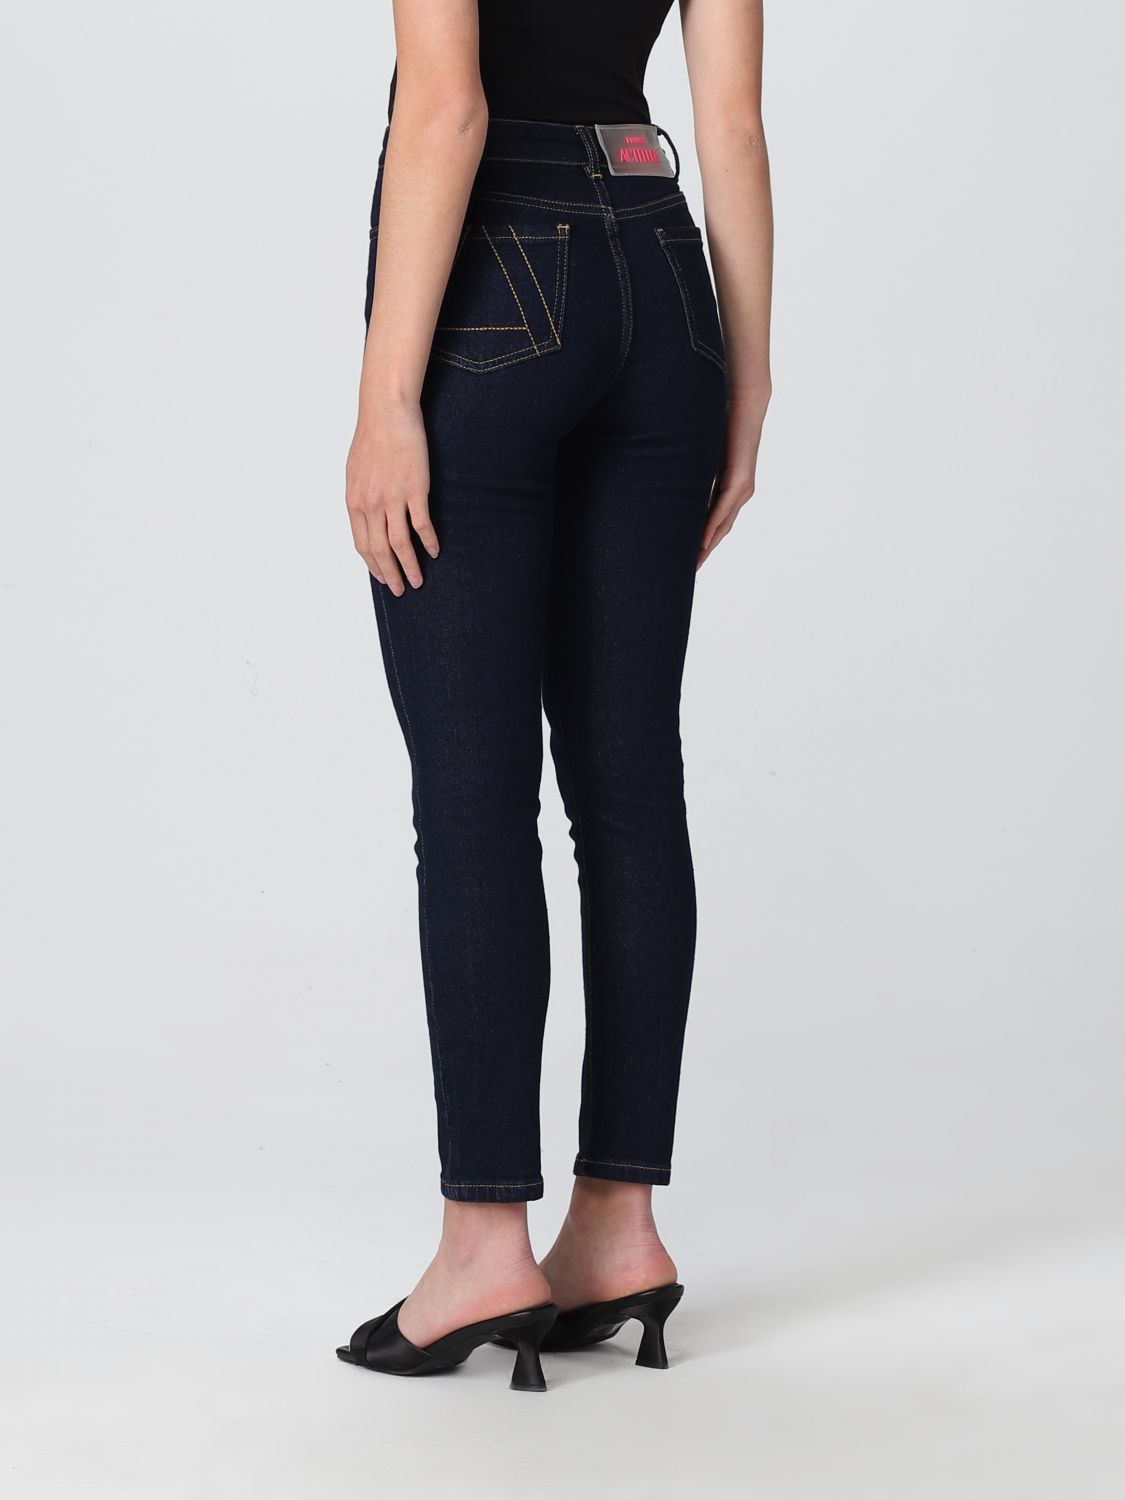 Jeans Actitude Twinset: Twinset-Actitude 5-pocket jeans in denim denim 2